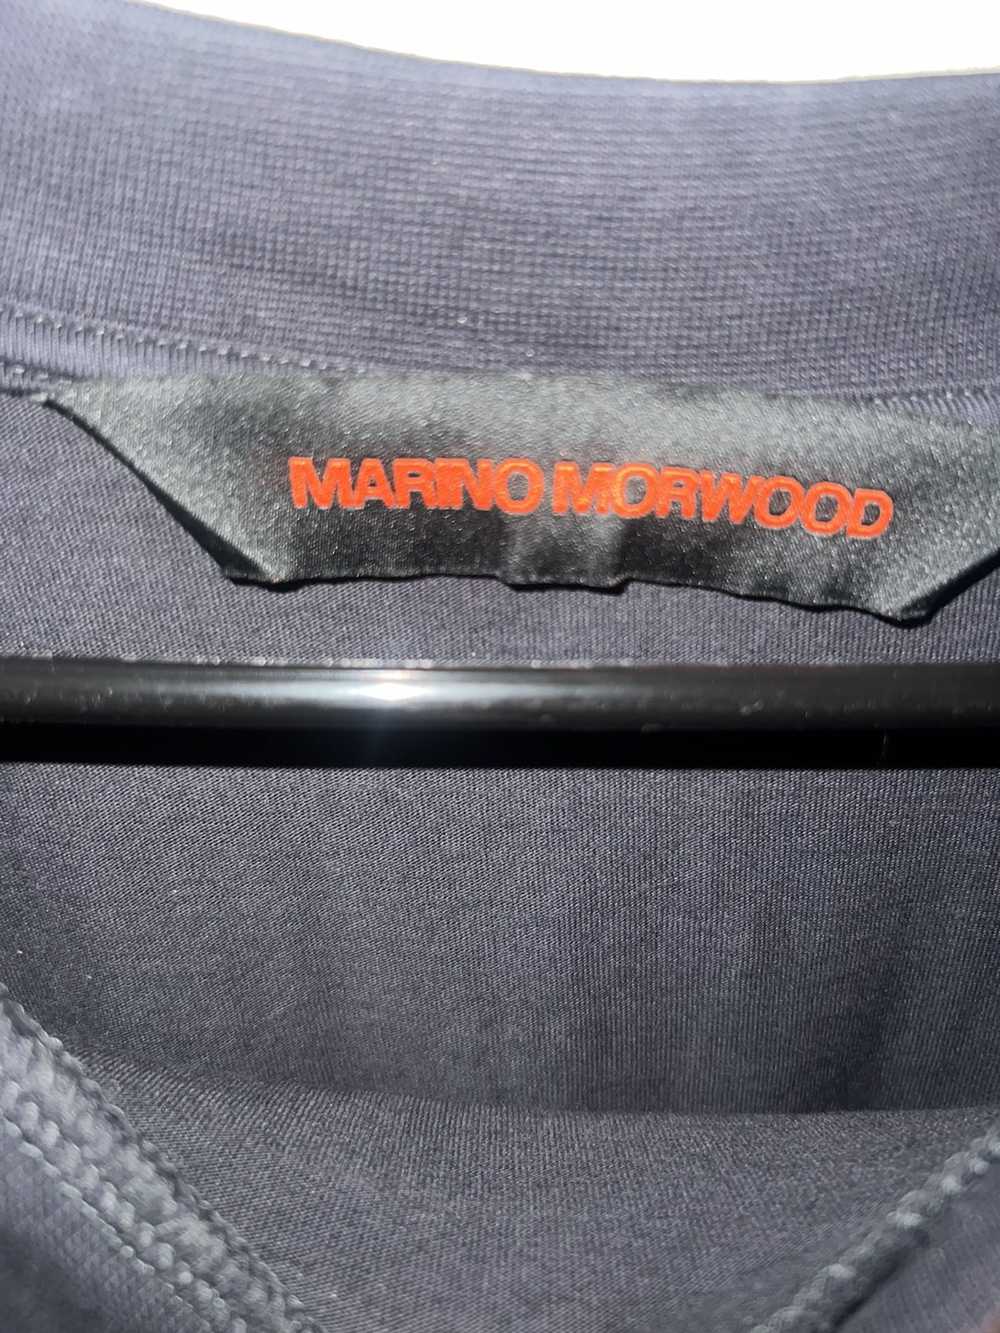 Marino Morwood Leonardo DiCaprio T-shirt - image 3